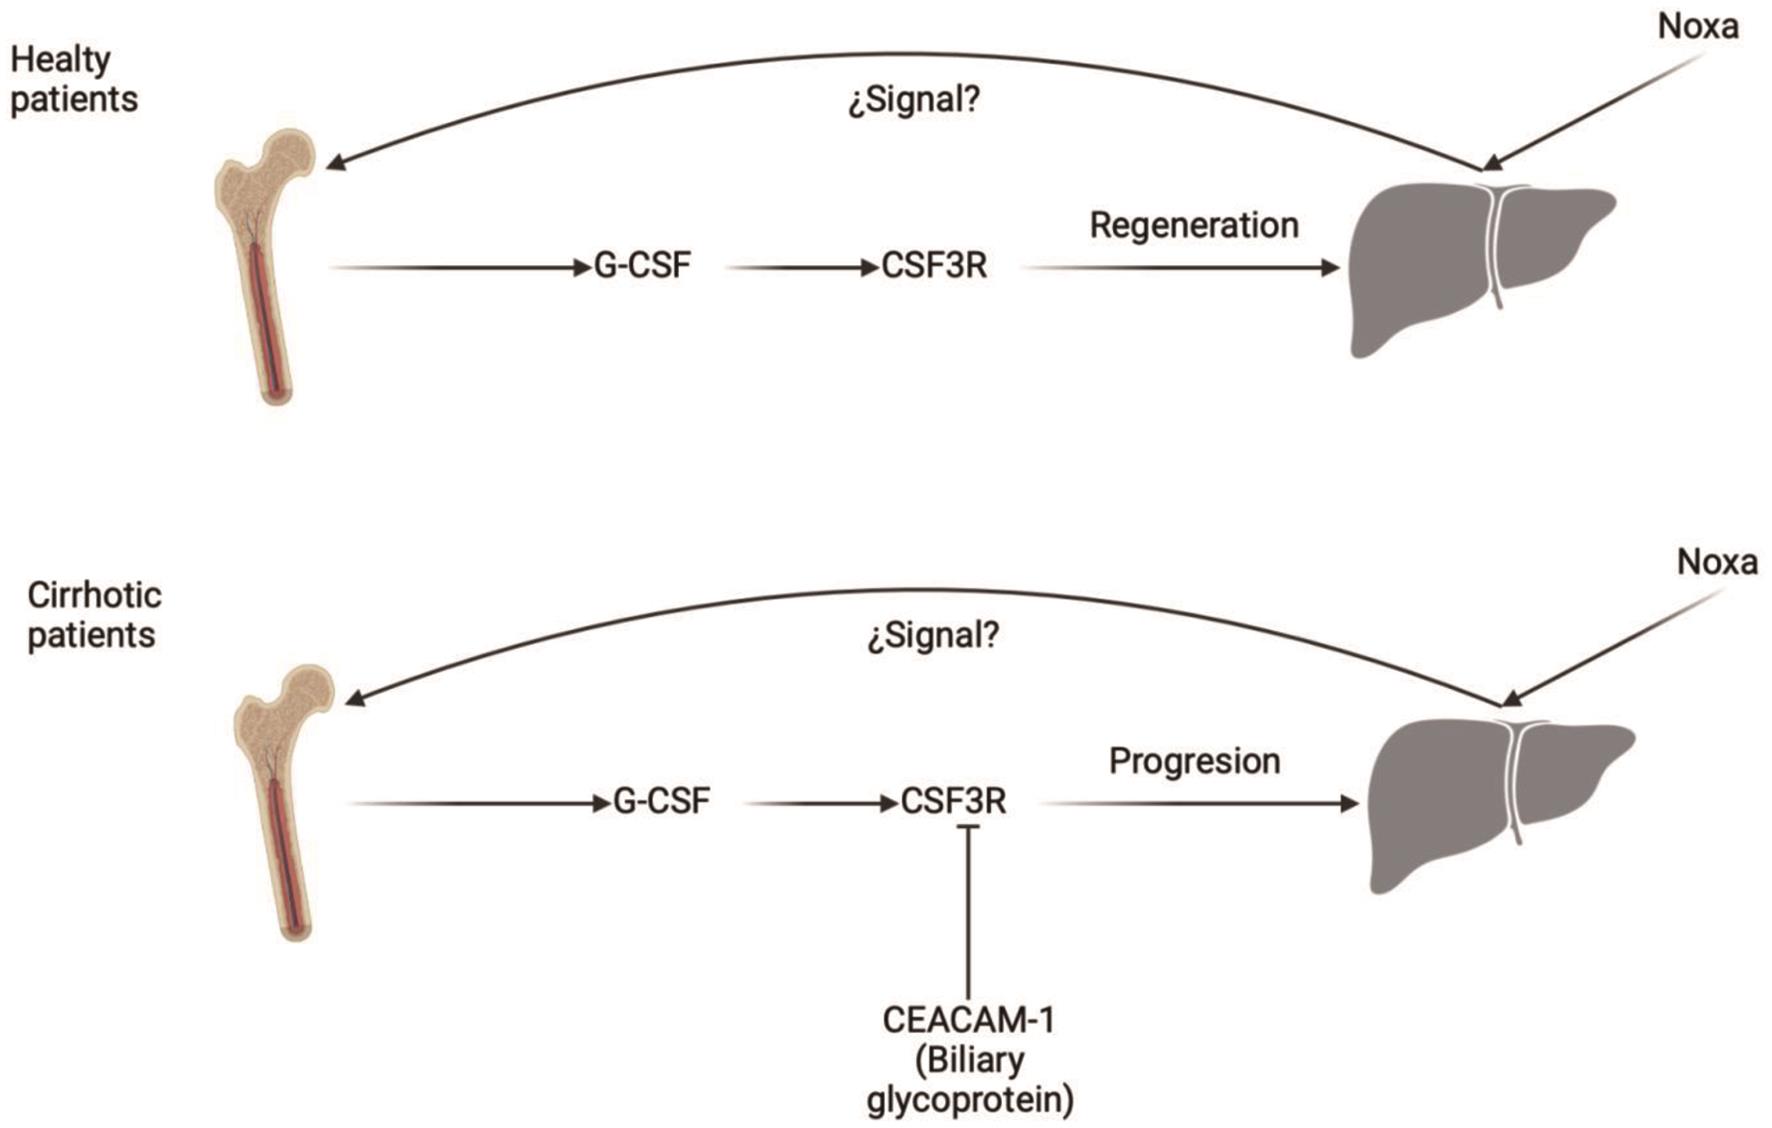 Bone marrow signaling pathway in mediating hepatic regeneration.